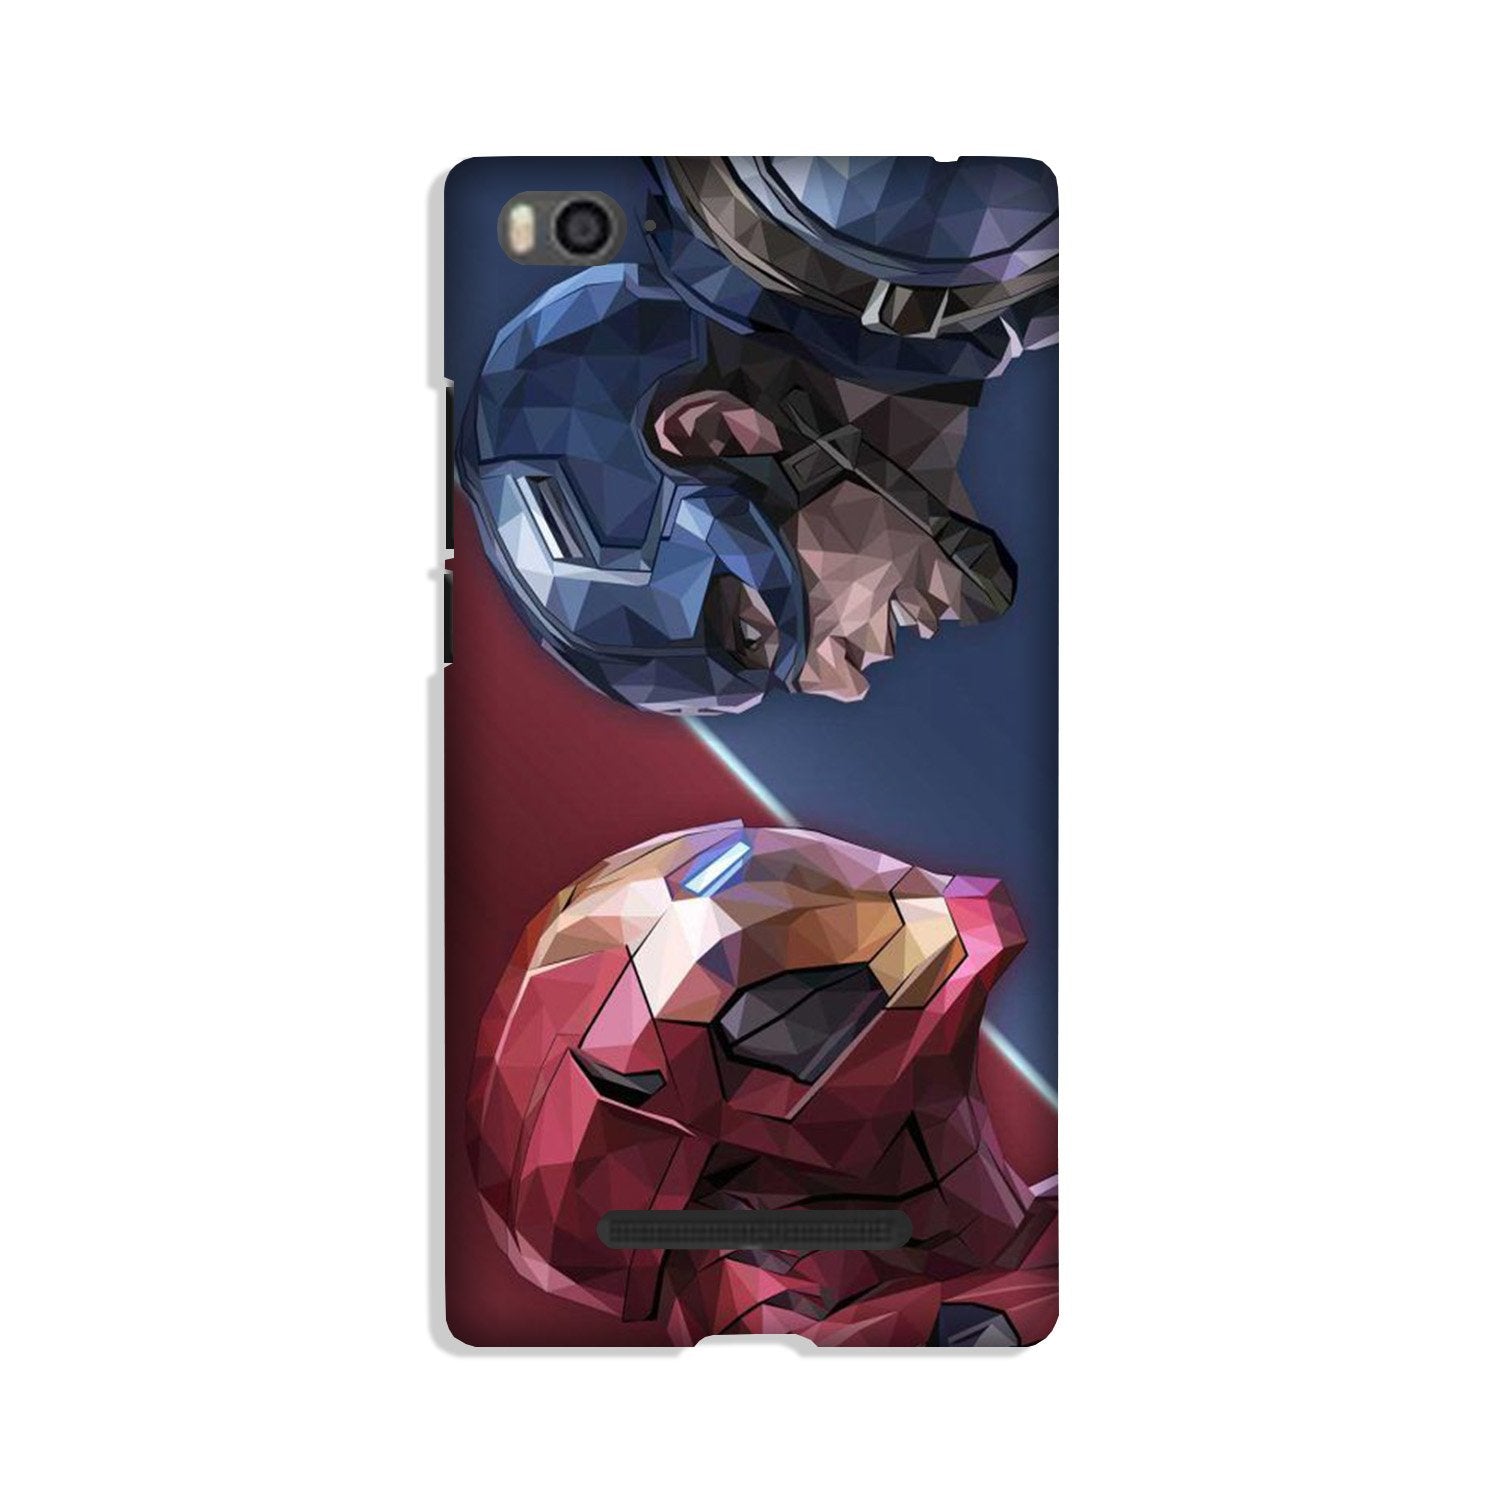 Ironman Captain America Case for Xiaomi Mi 4i (Design No. 245)